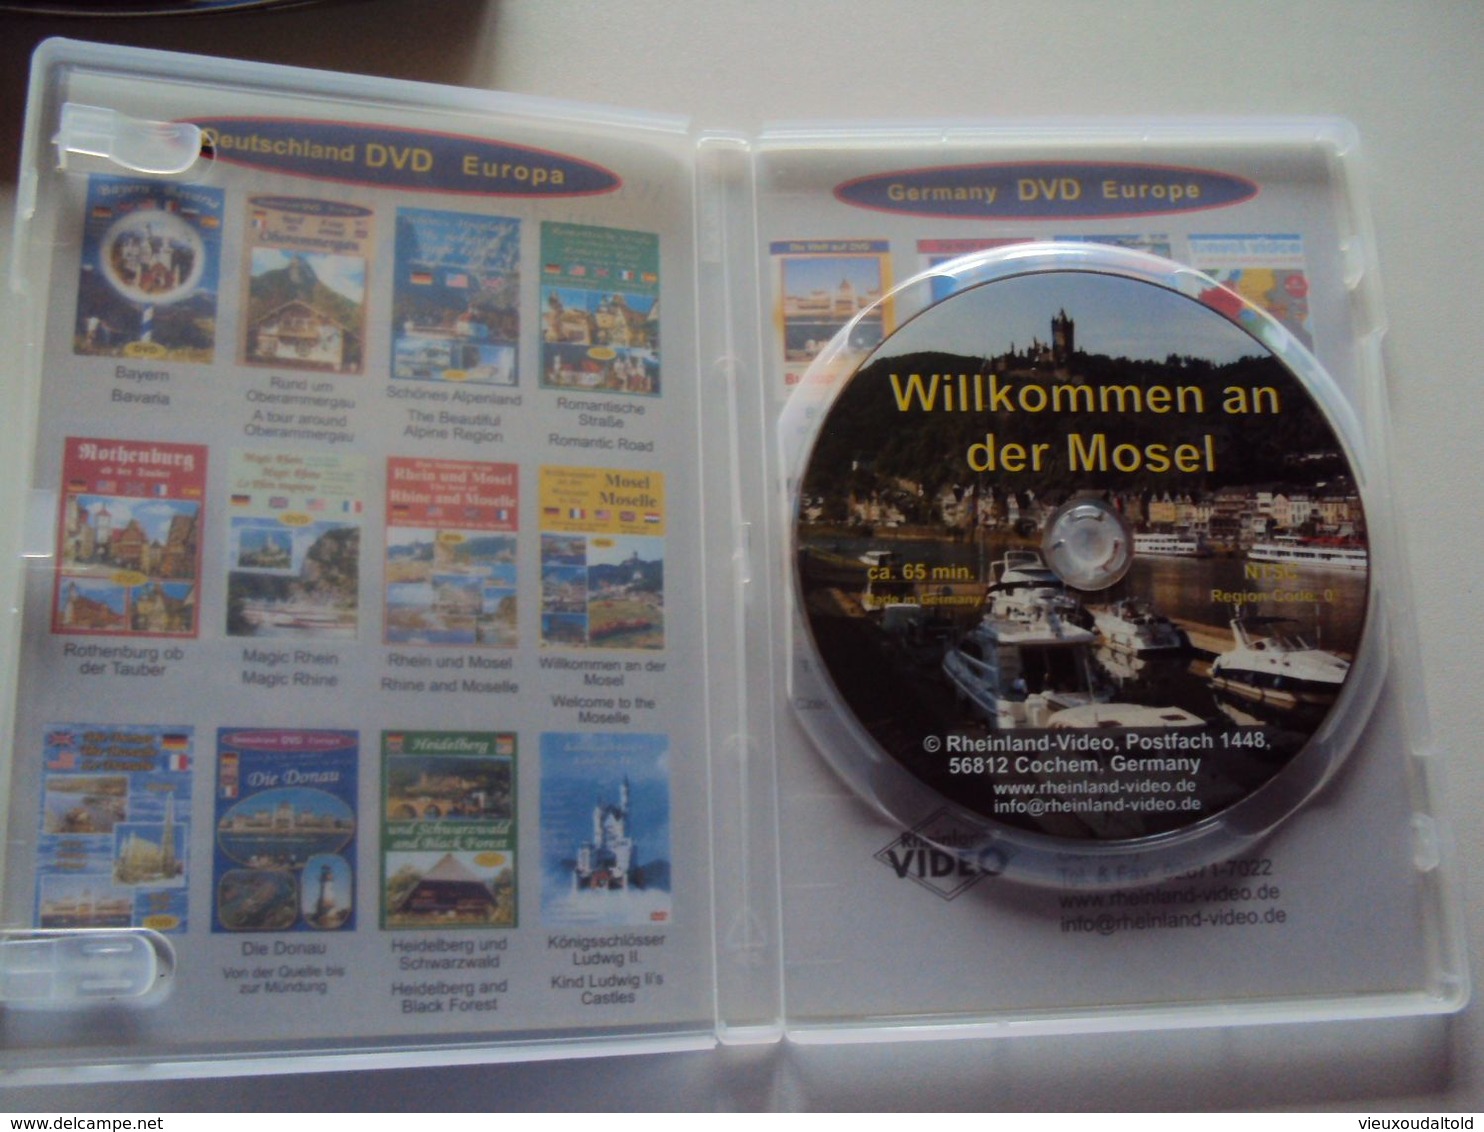 DVD    WELKOM - BIENVENUE - WILLKOMMEN - WELCOME To The Moselle / An Der Mosel/de La Moselle/aan De Moezel - Voyage